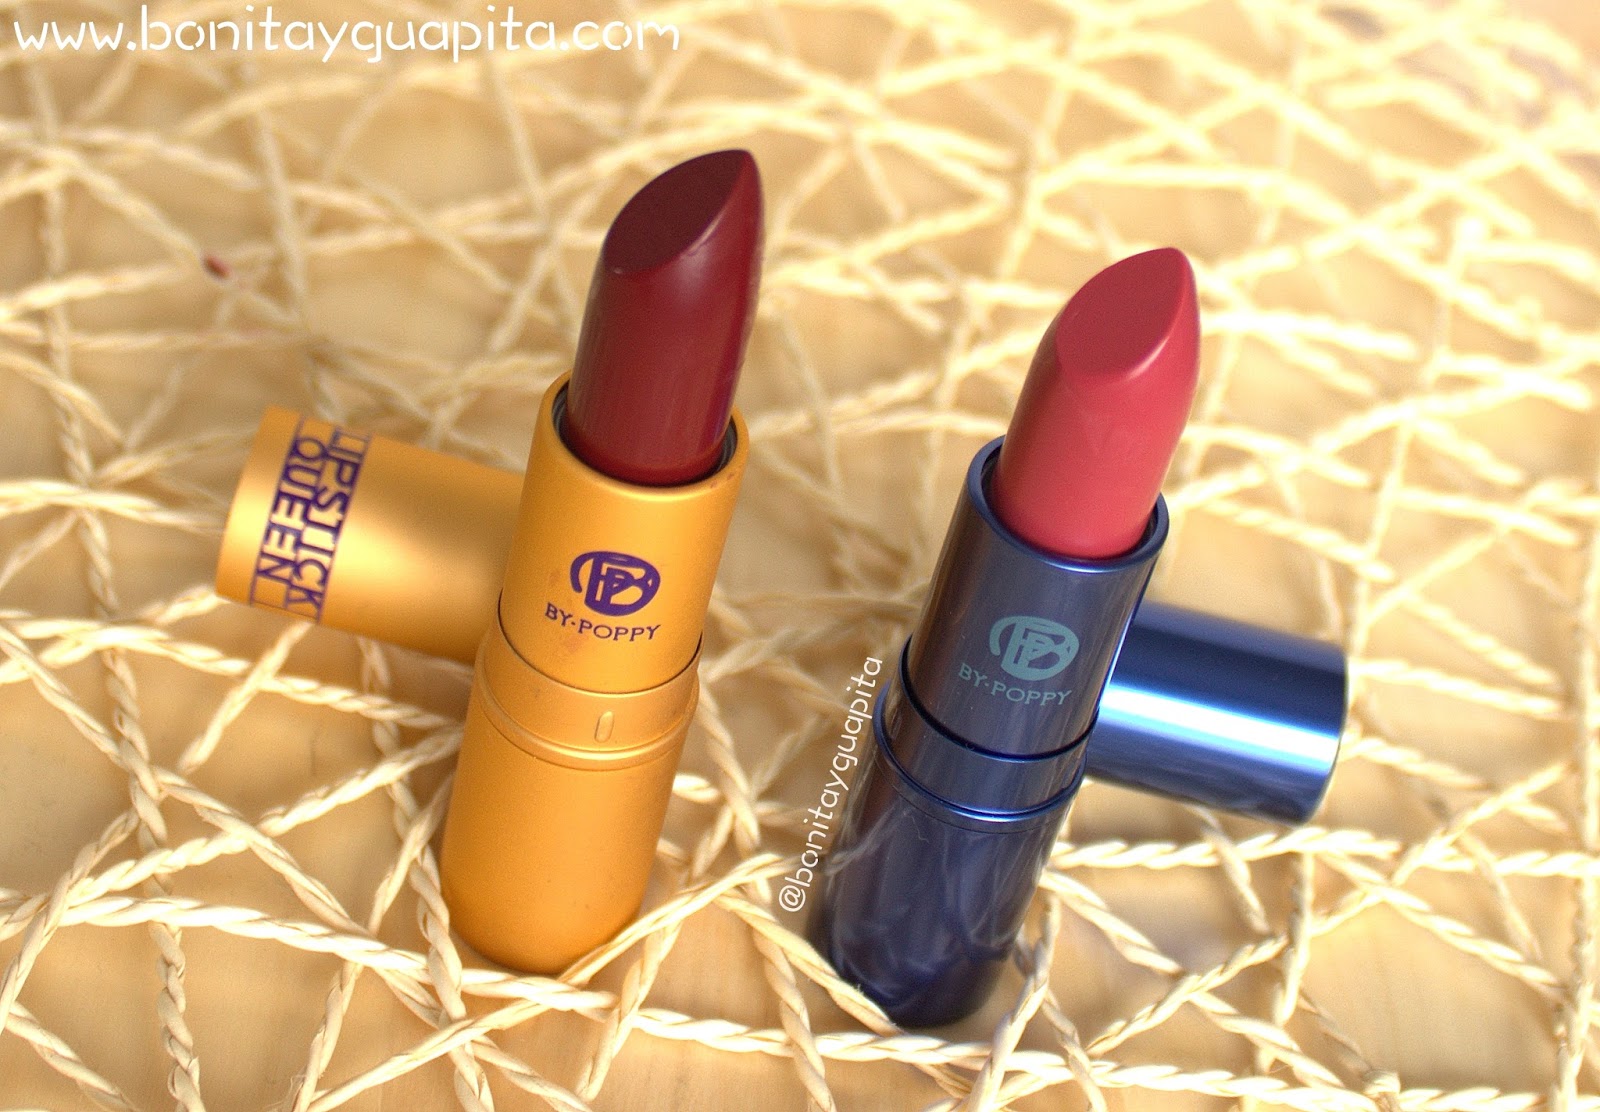 Lipstick Queen by poppy